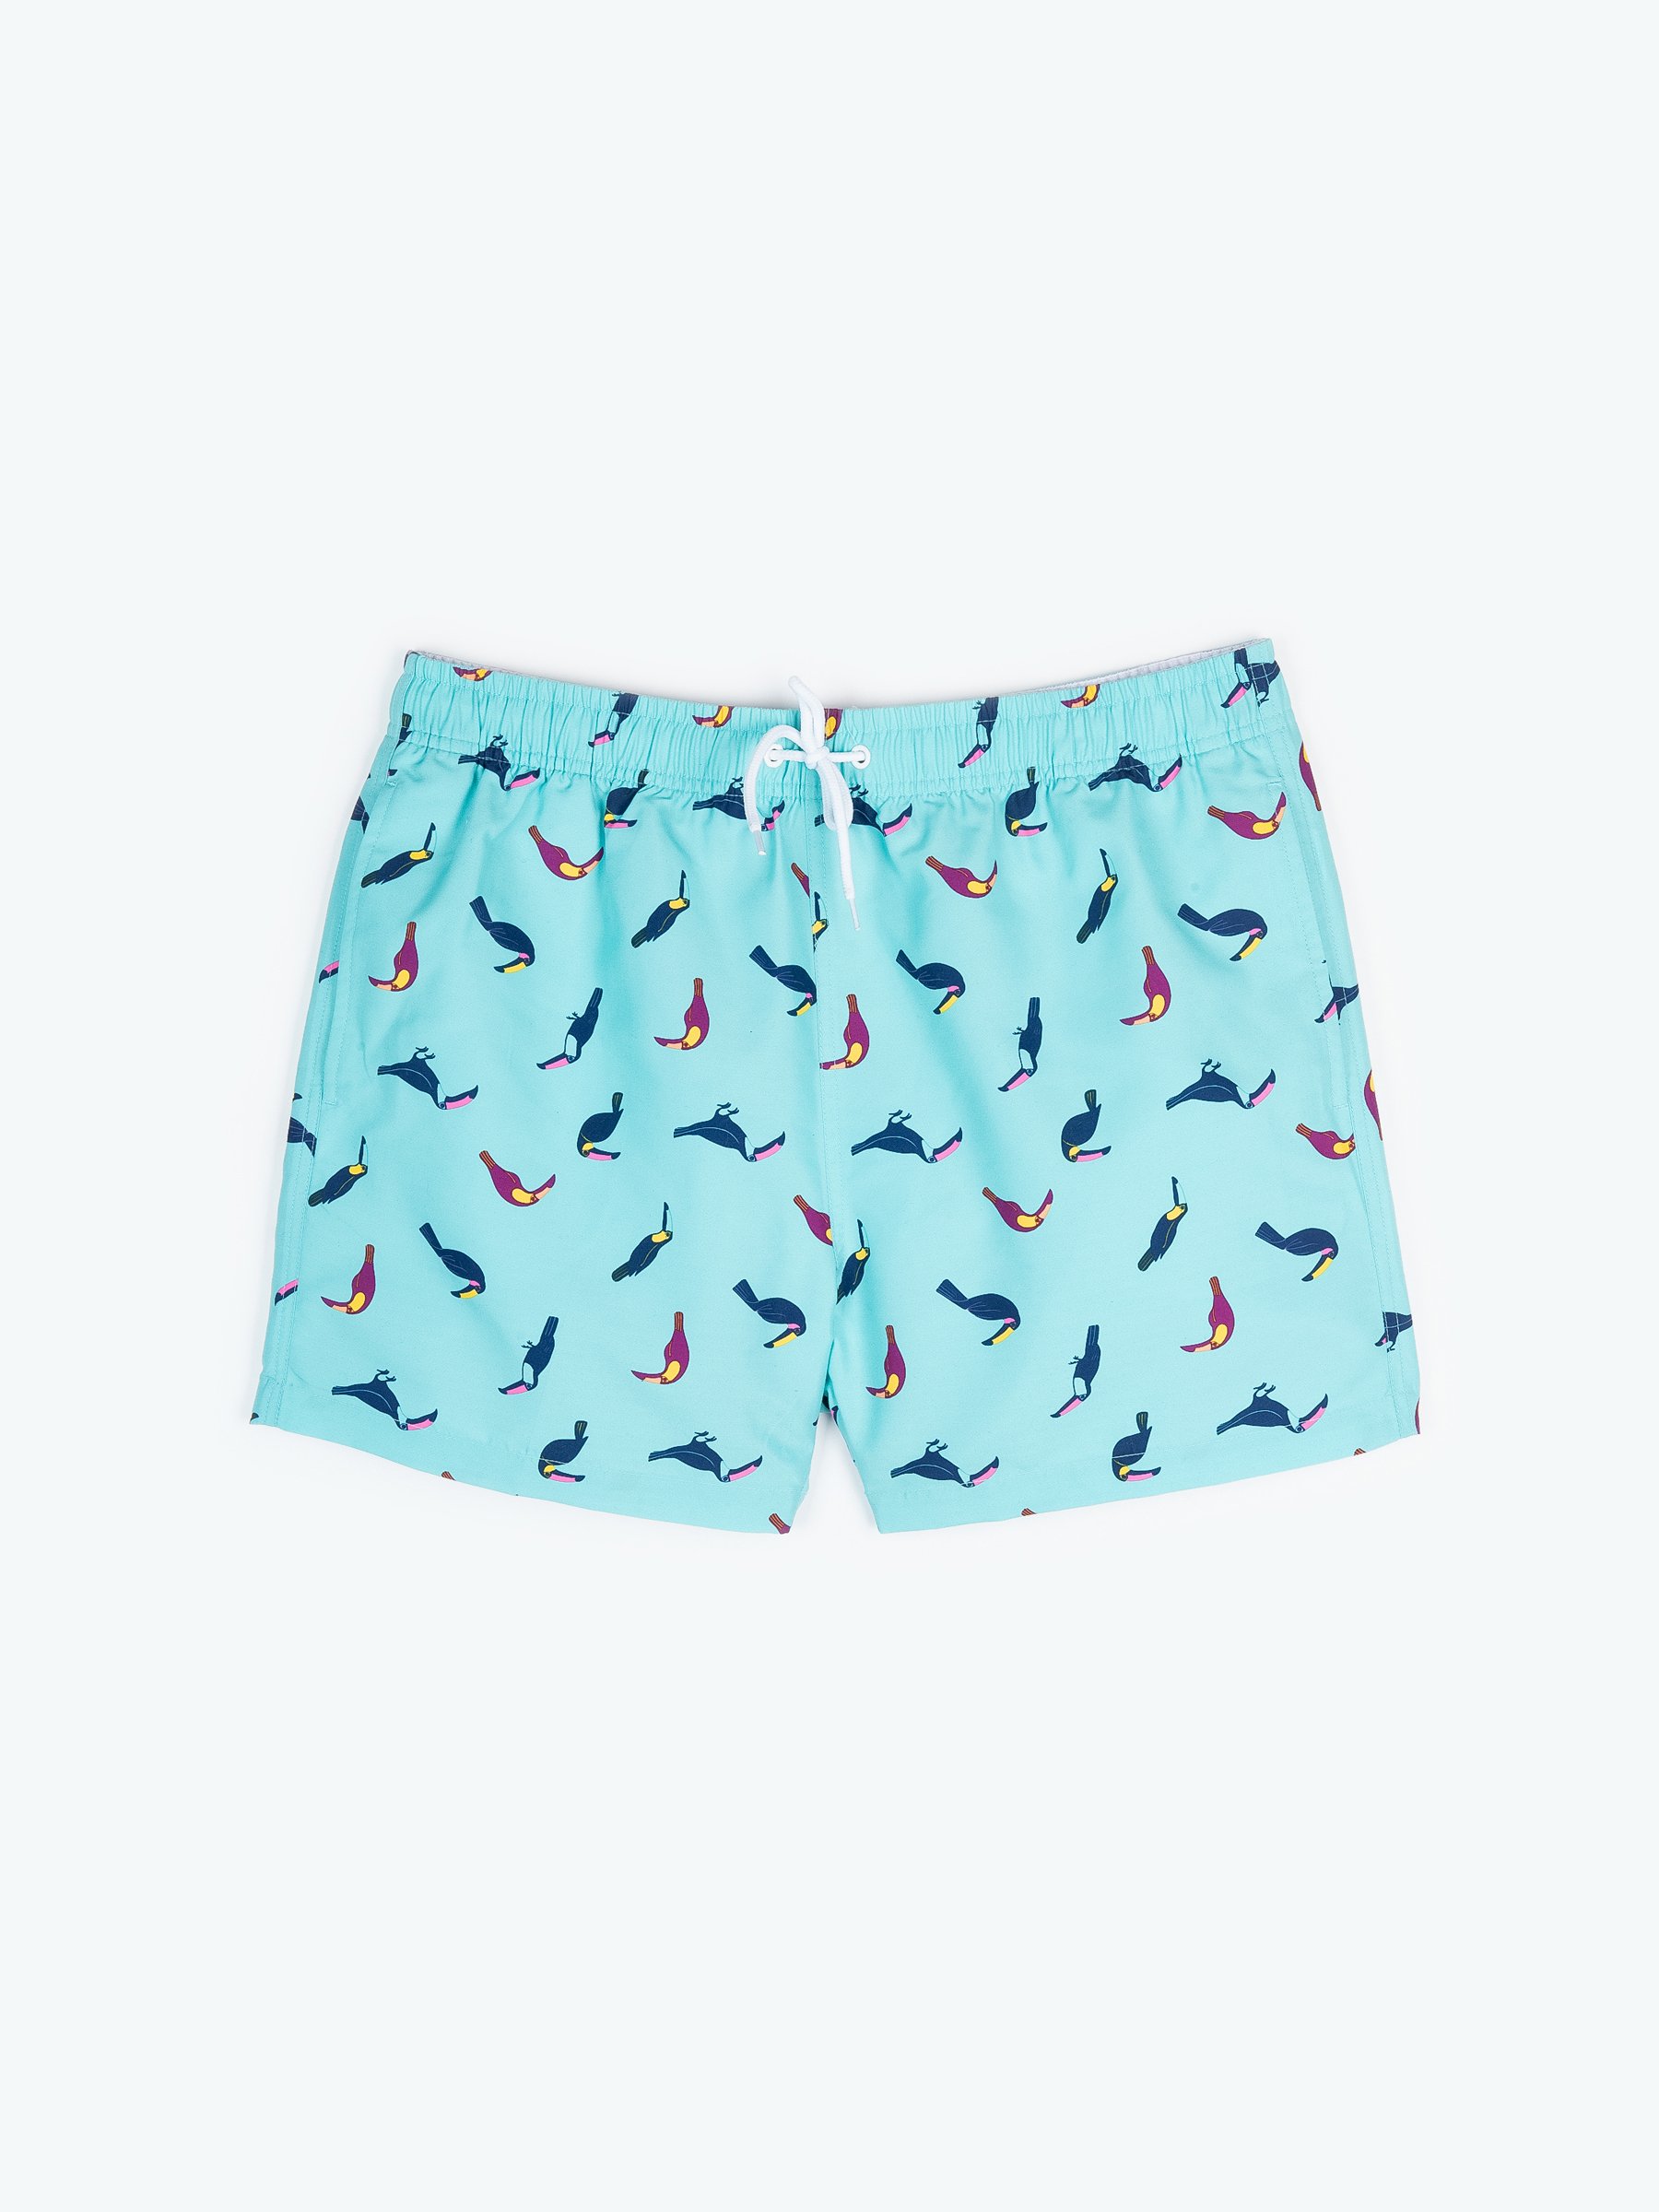 Printed Mens Shorts Tigivemen Summer Swim Camouflage Printed Trunks Beach Shorts Stretchy 